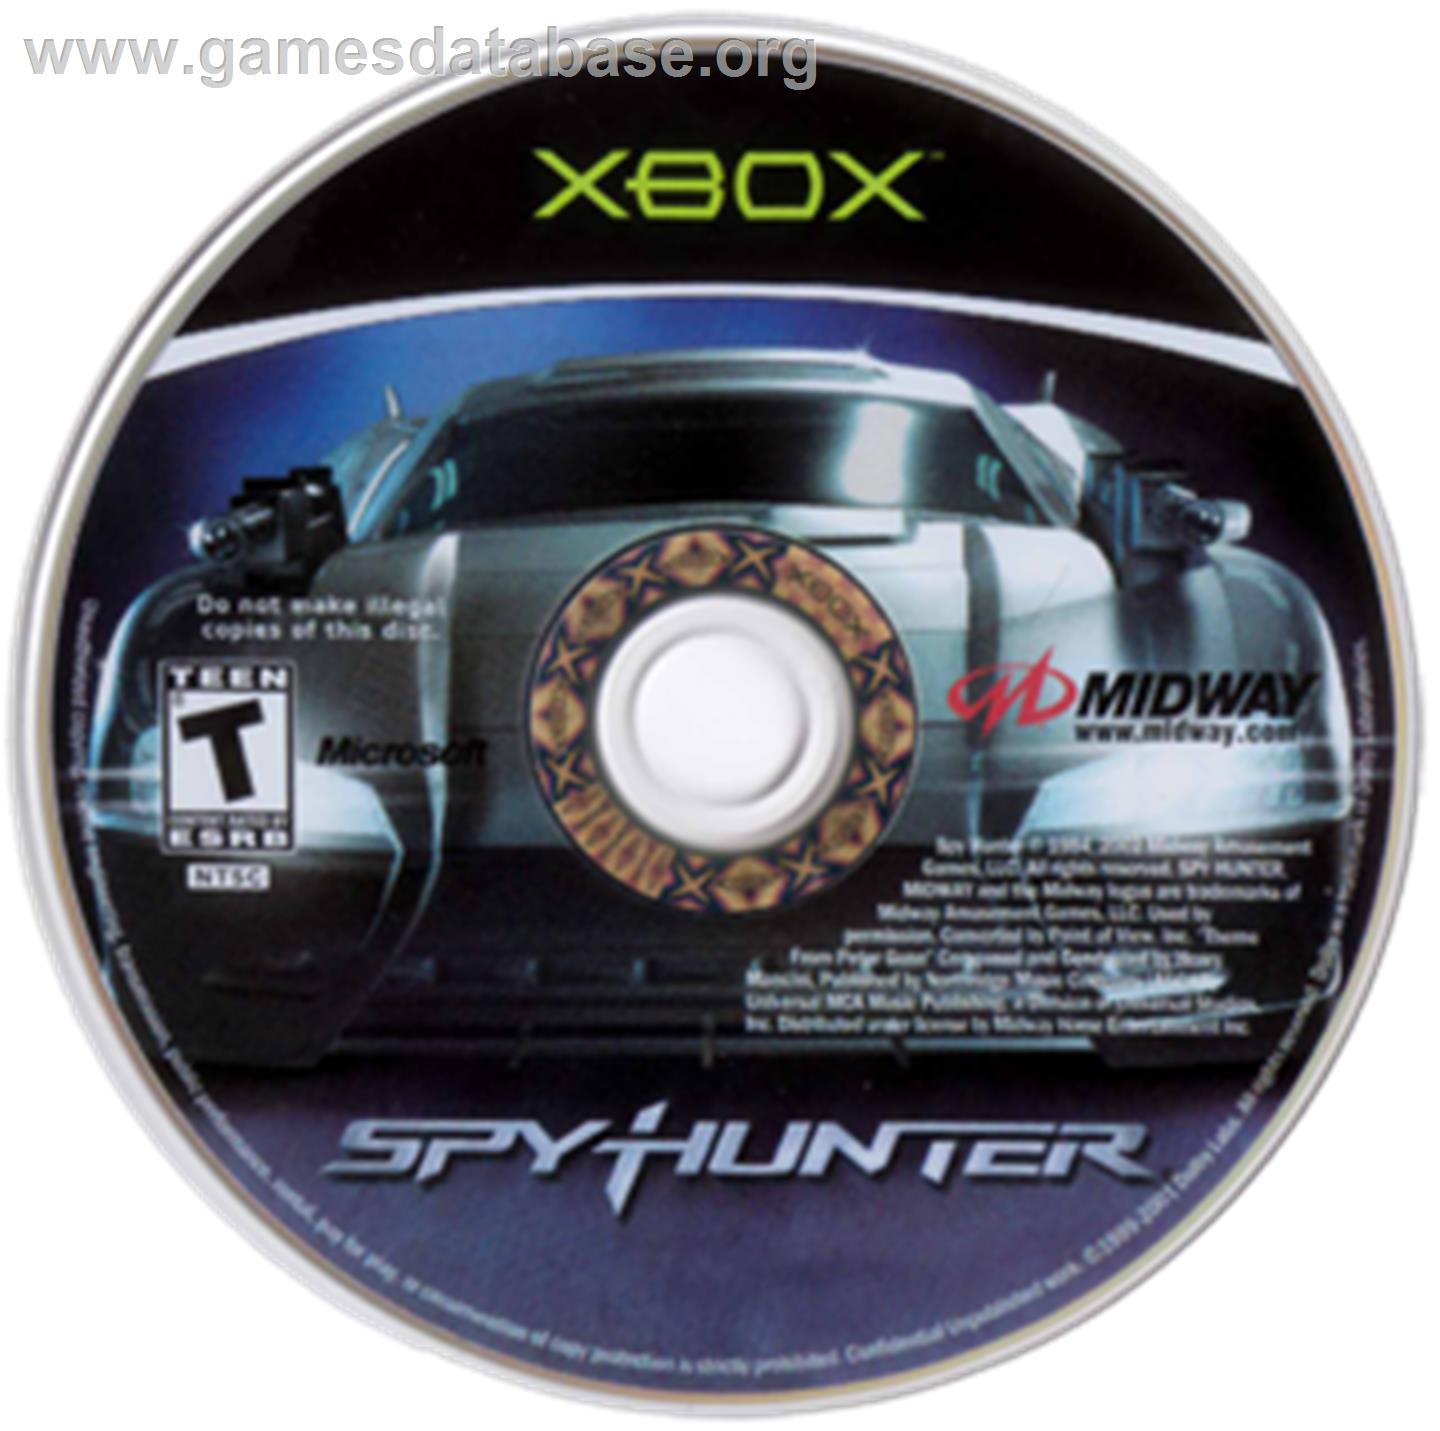 Spy Hunter: Nowhere to Run - Microsoft Xbox - Artwork - CD